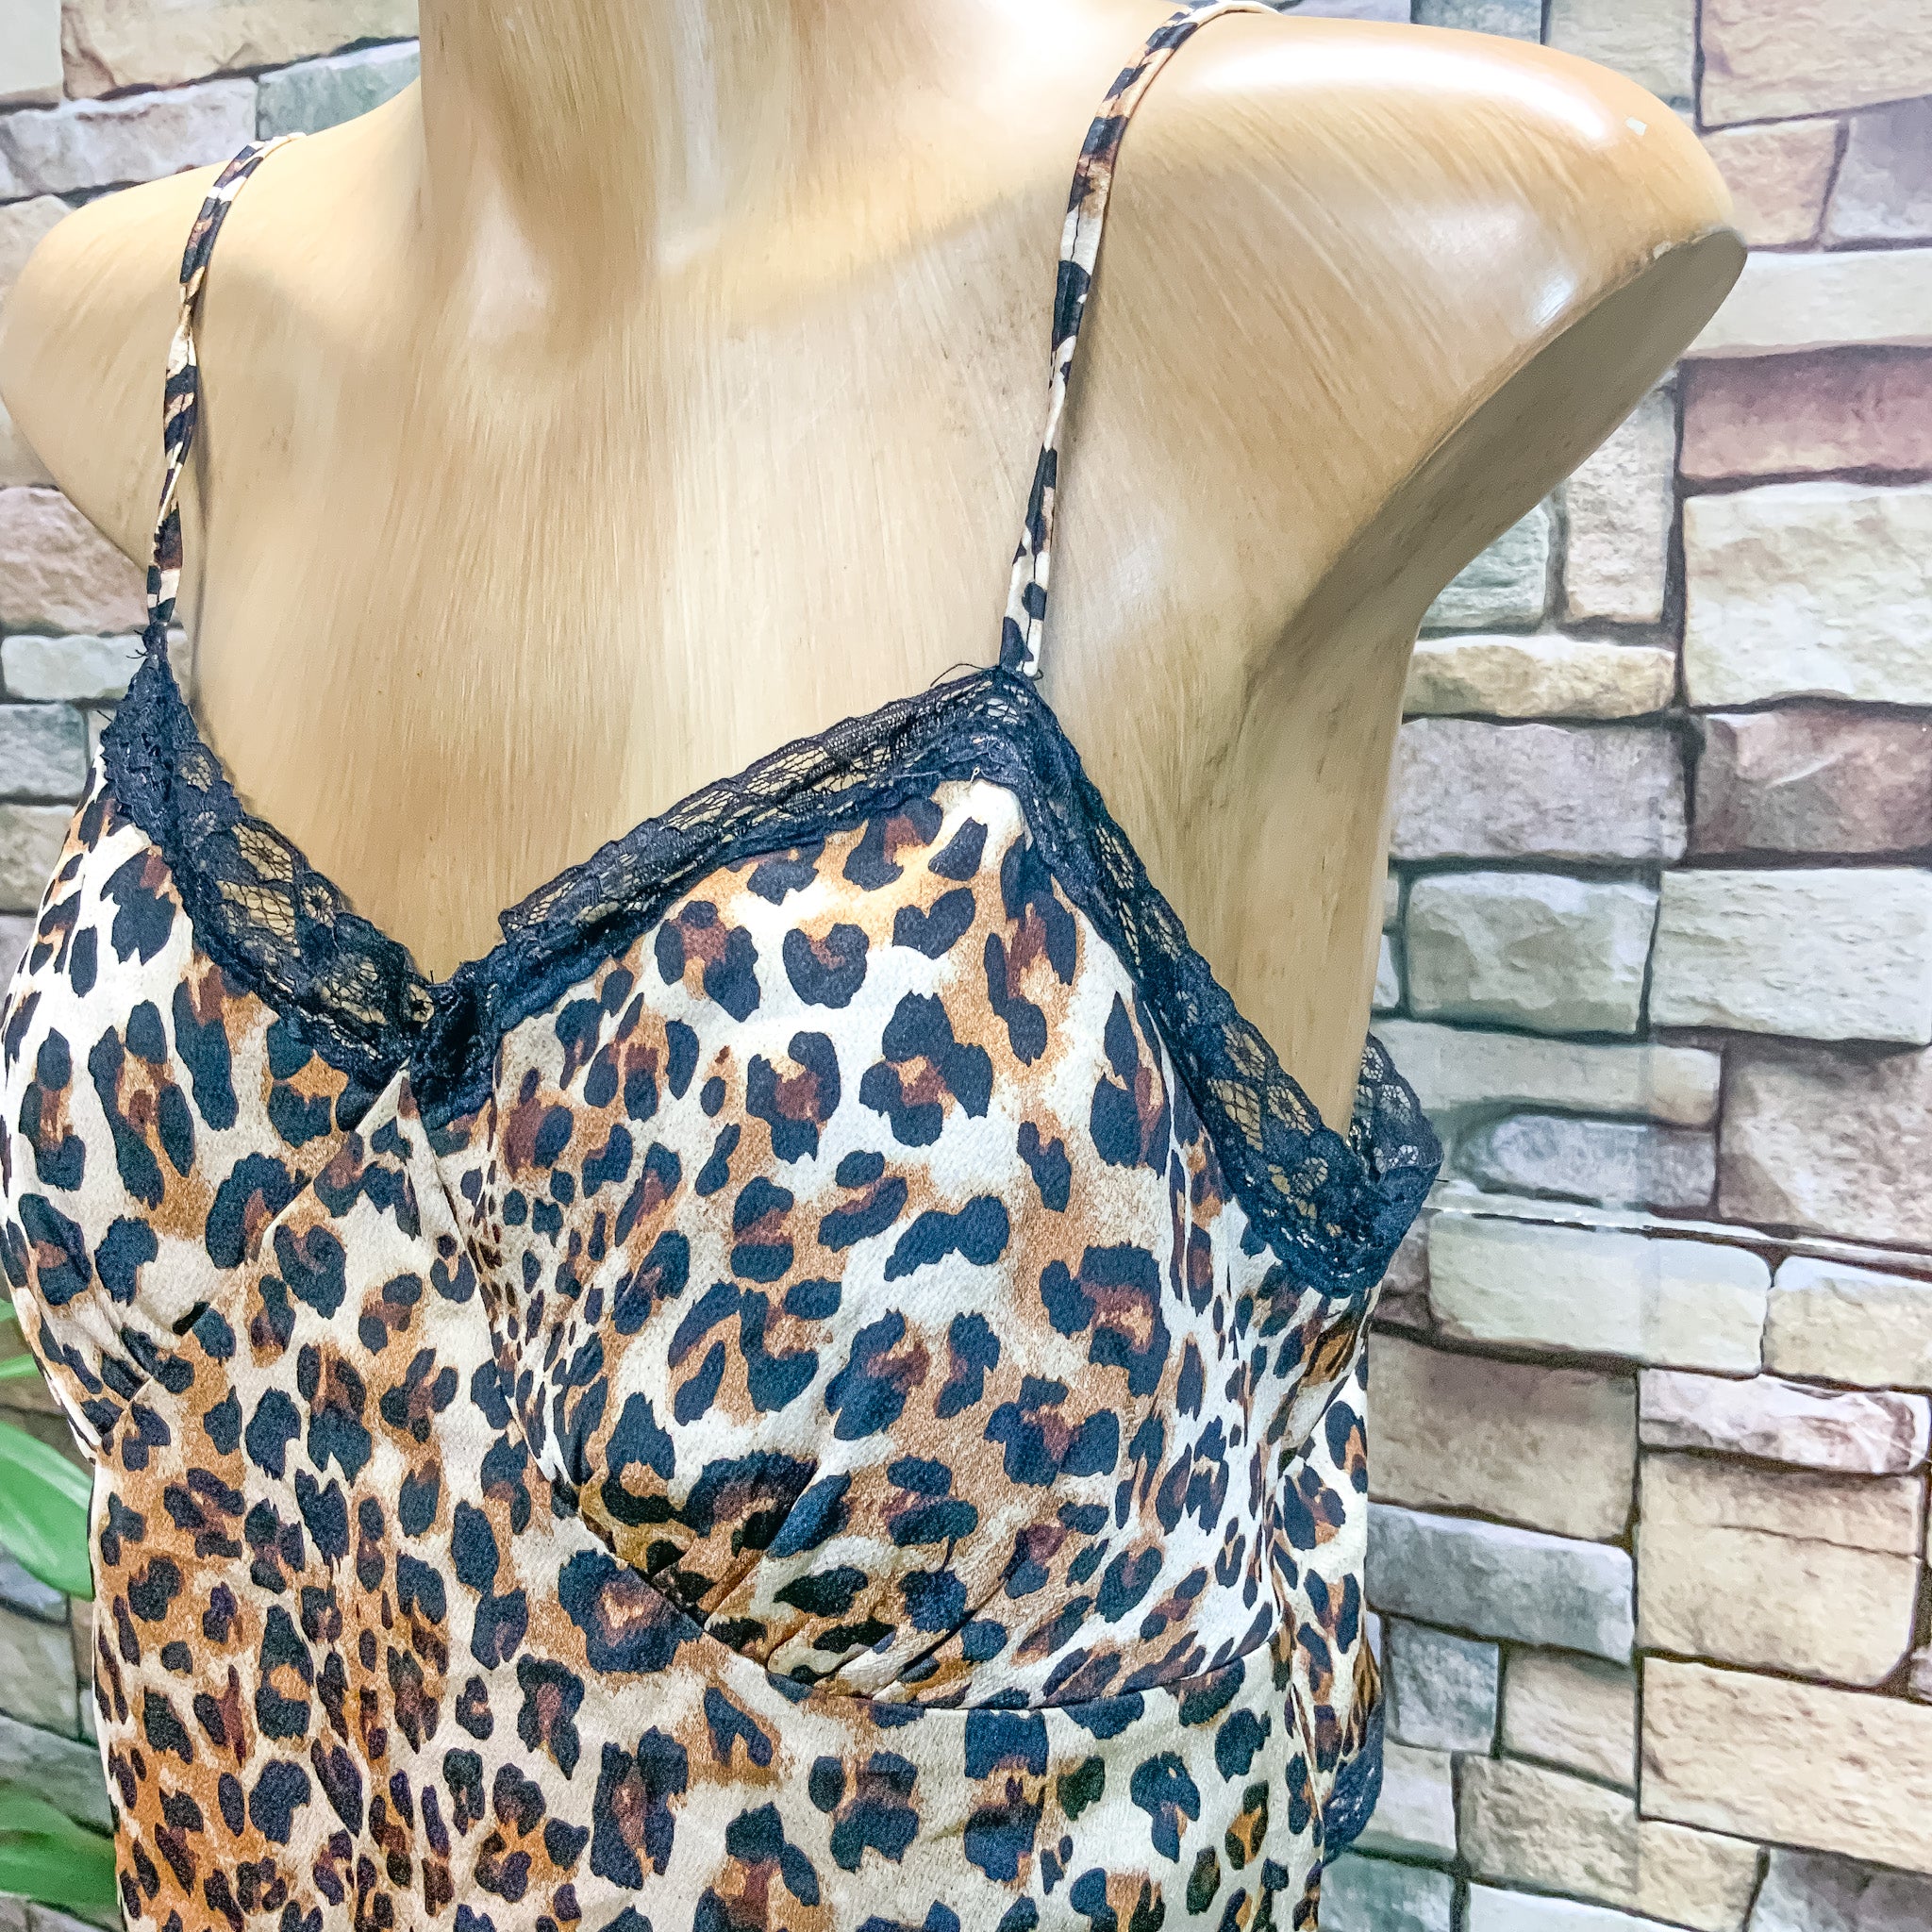 BNWT VALLEYGIRL Leopard Print Lace Trim Camisole Top - Size 8